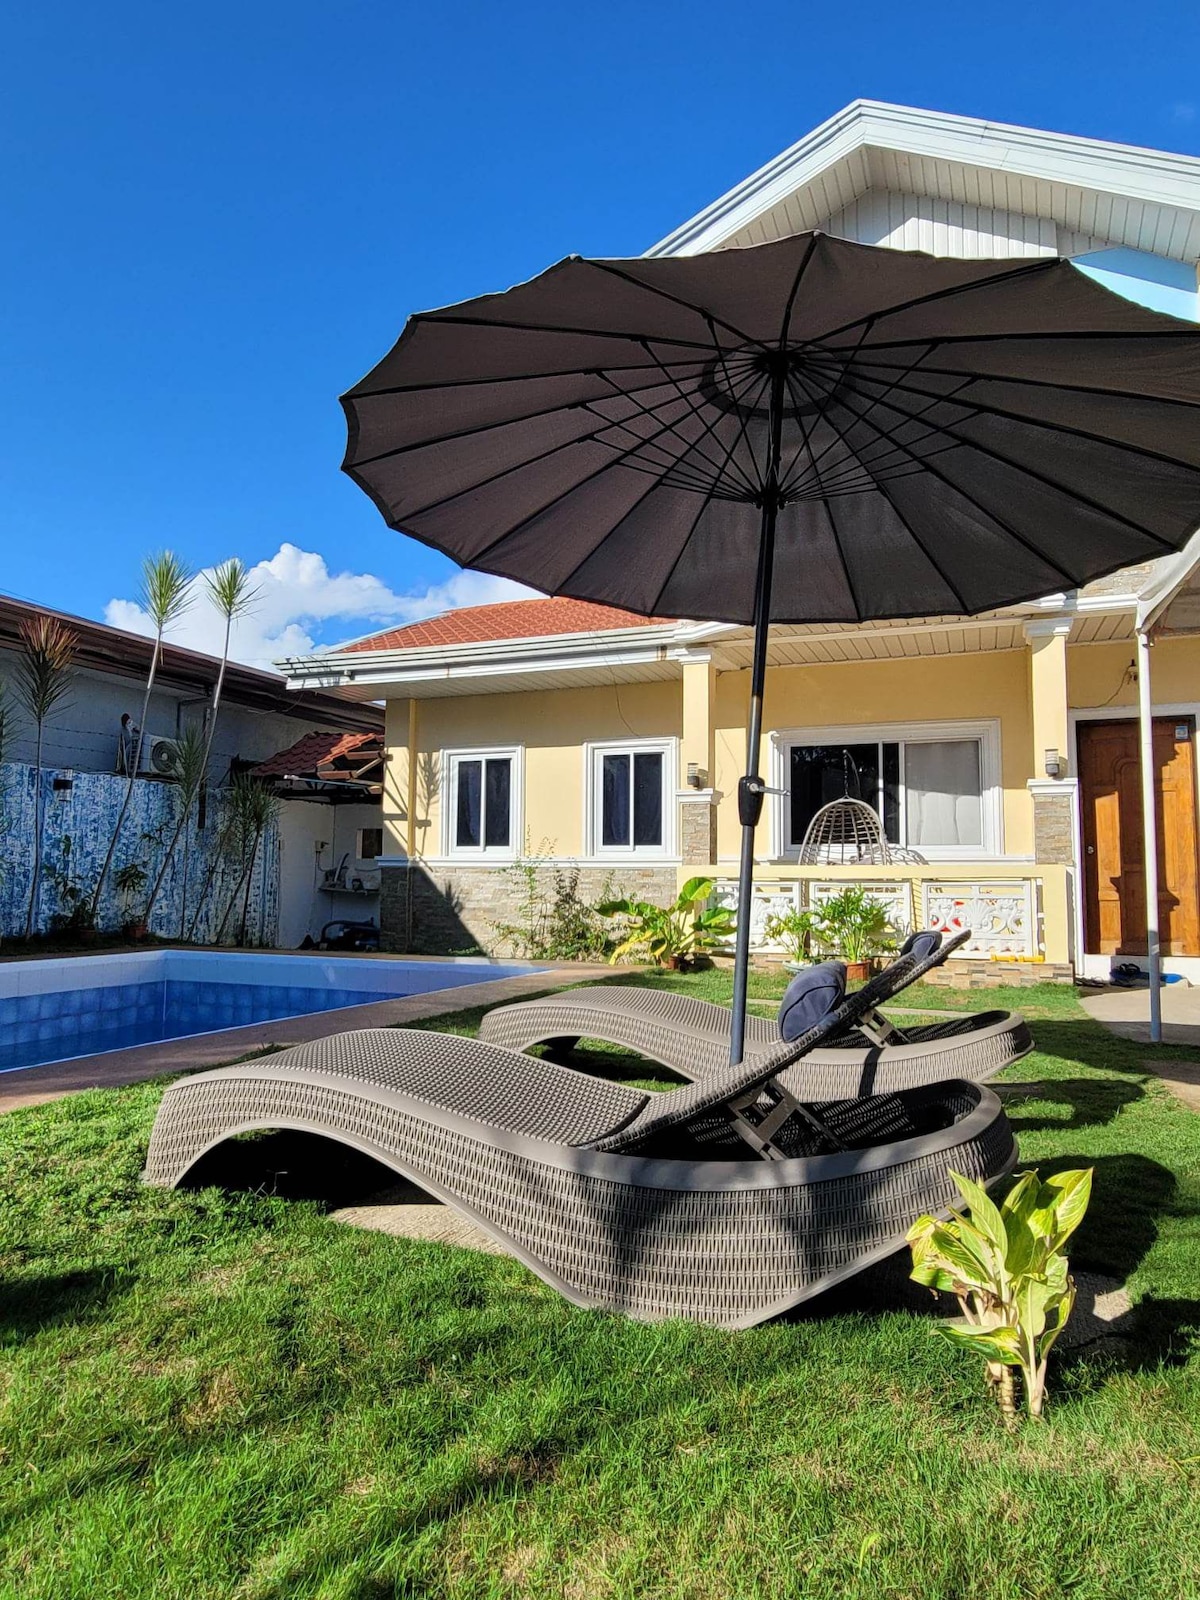 Nam's pool villa in panglao